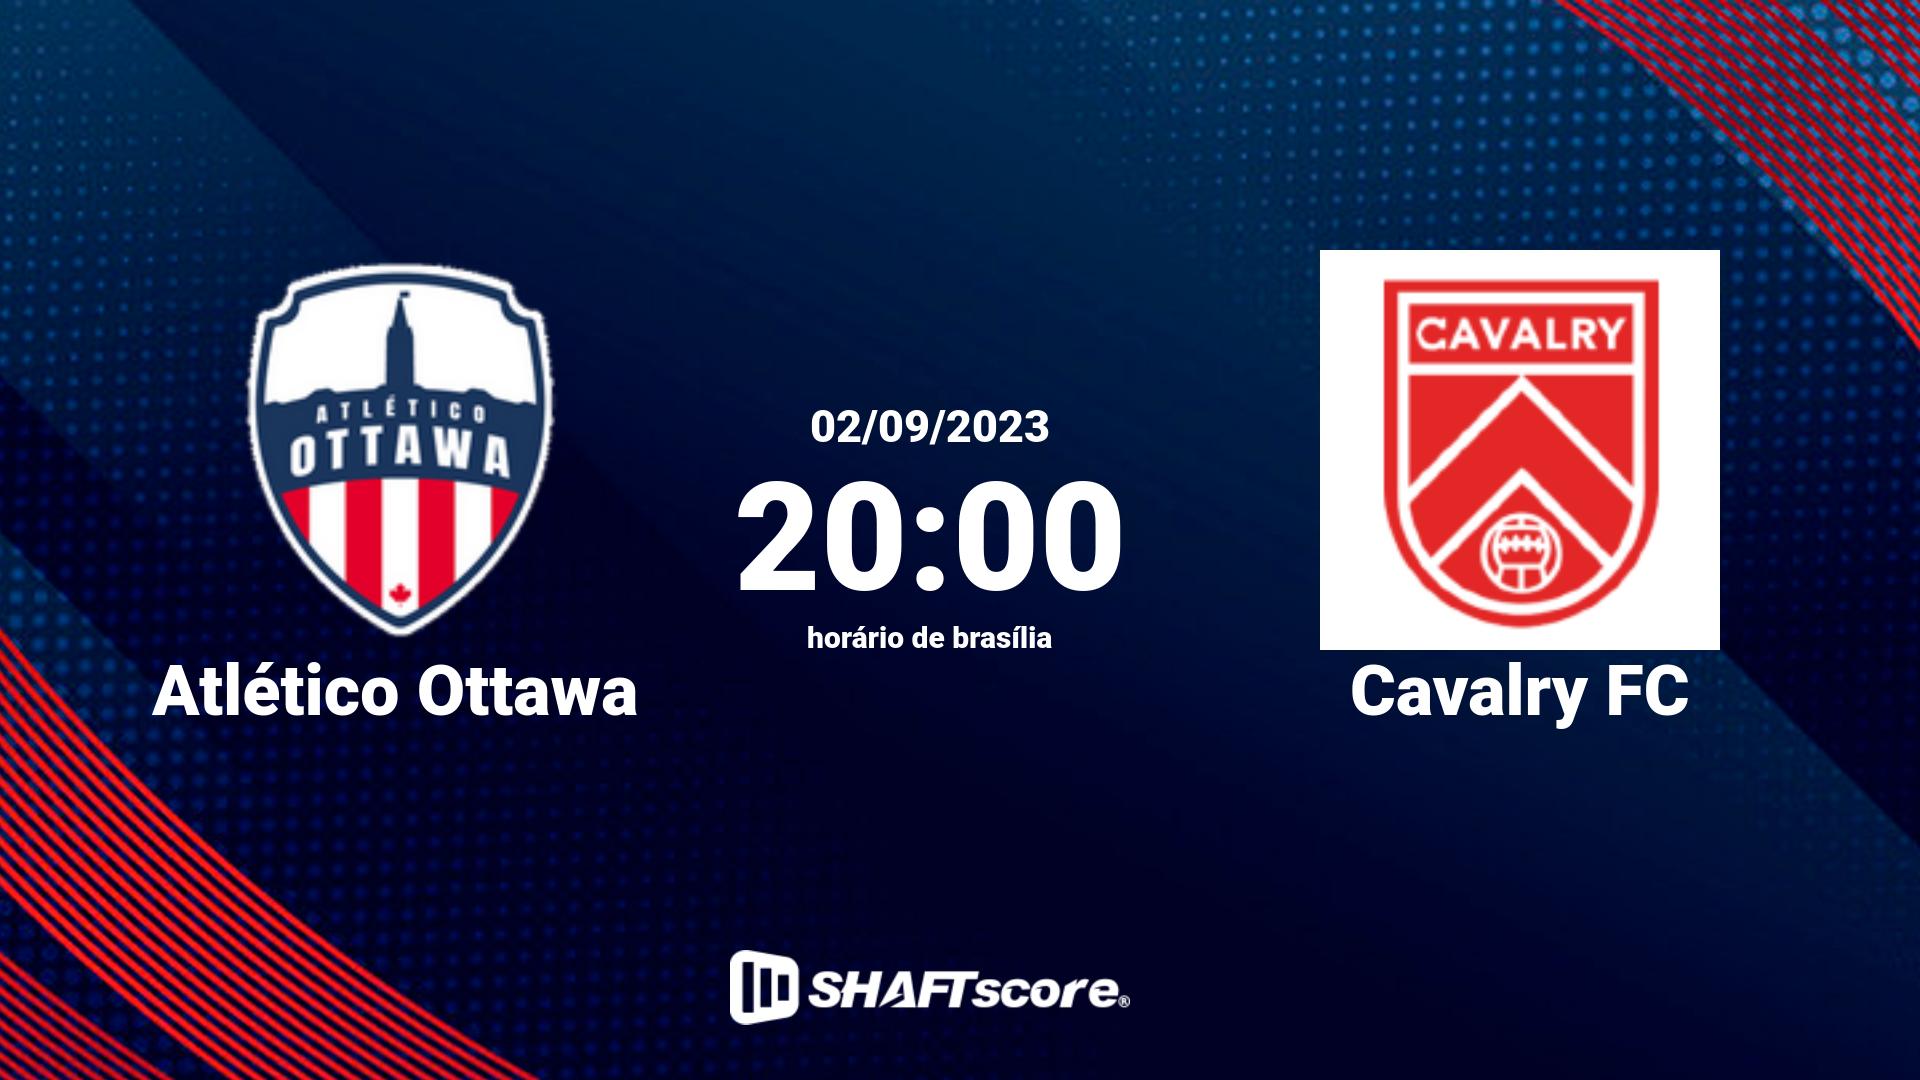 Estatísticas do jogo Atlético Ottawa vs Cavalry FC 02.09 20:00